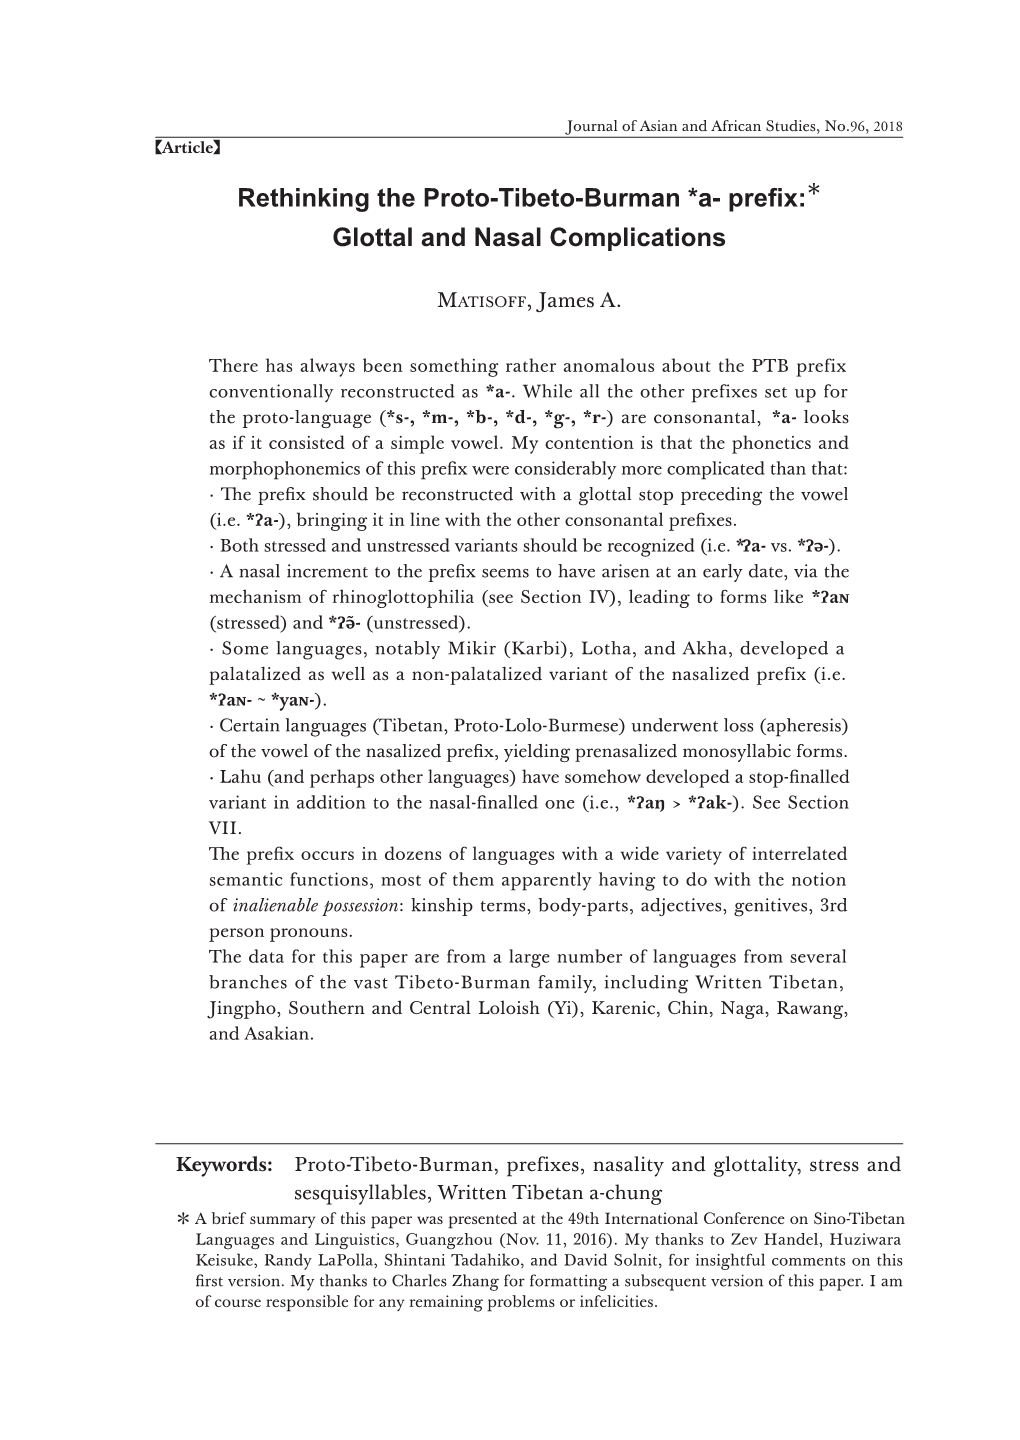 Rethinking the Proto-Tibeto-Burman *A- Prefix: Glottal and Nasal Complications 31